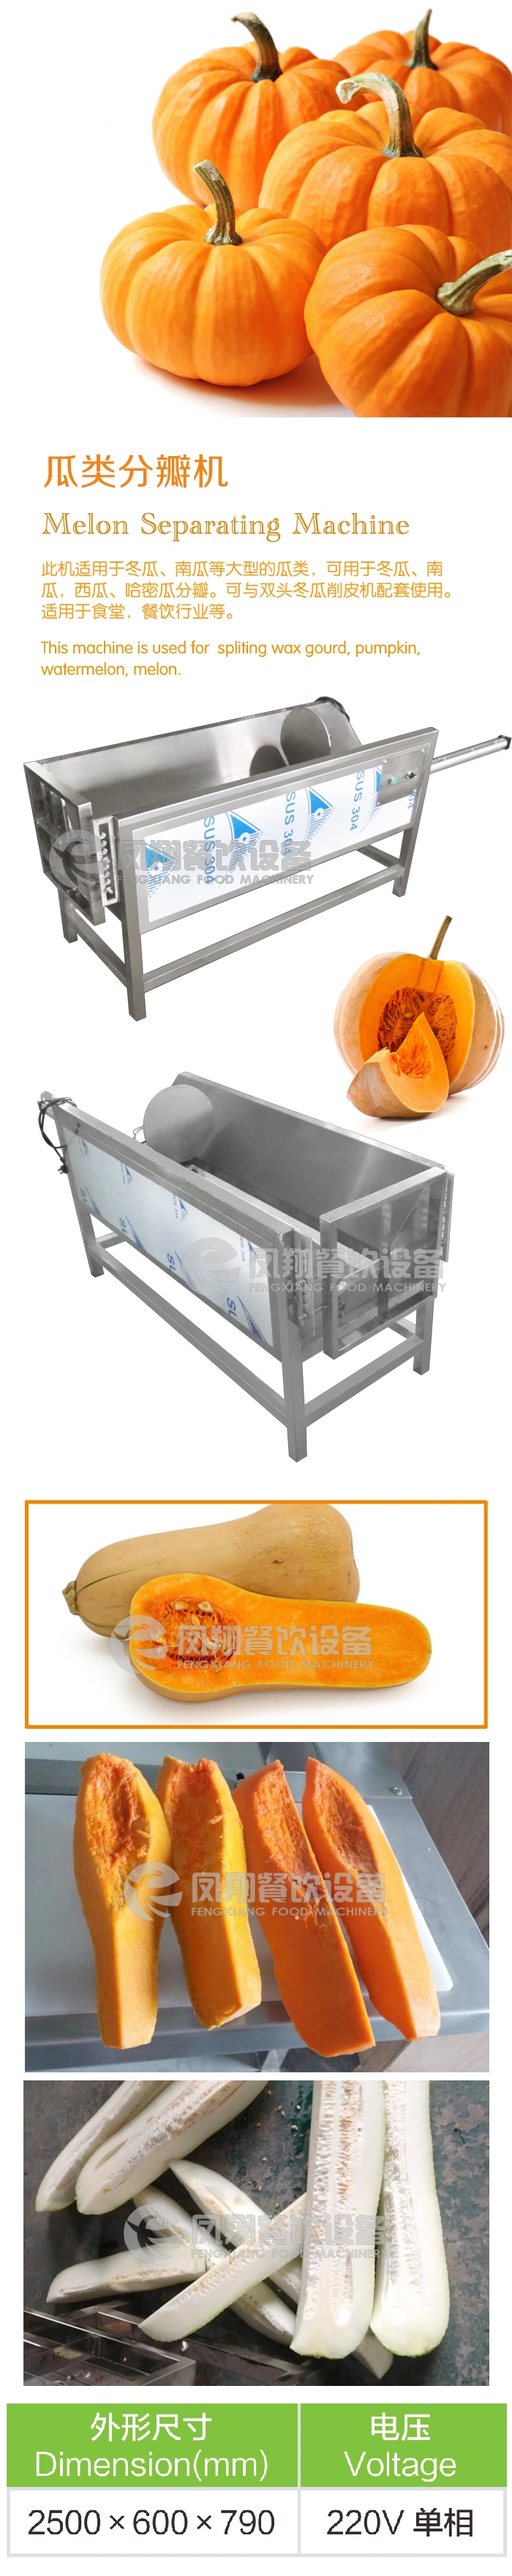 Pneumatic Type Pumpkin Slicing Separating Machine Melon Cutter